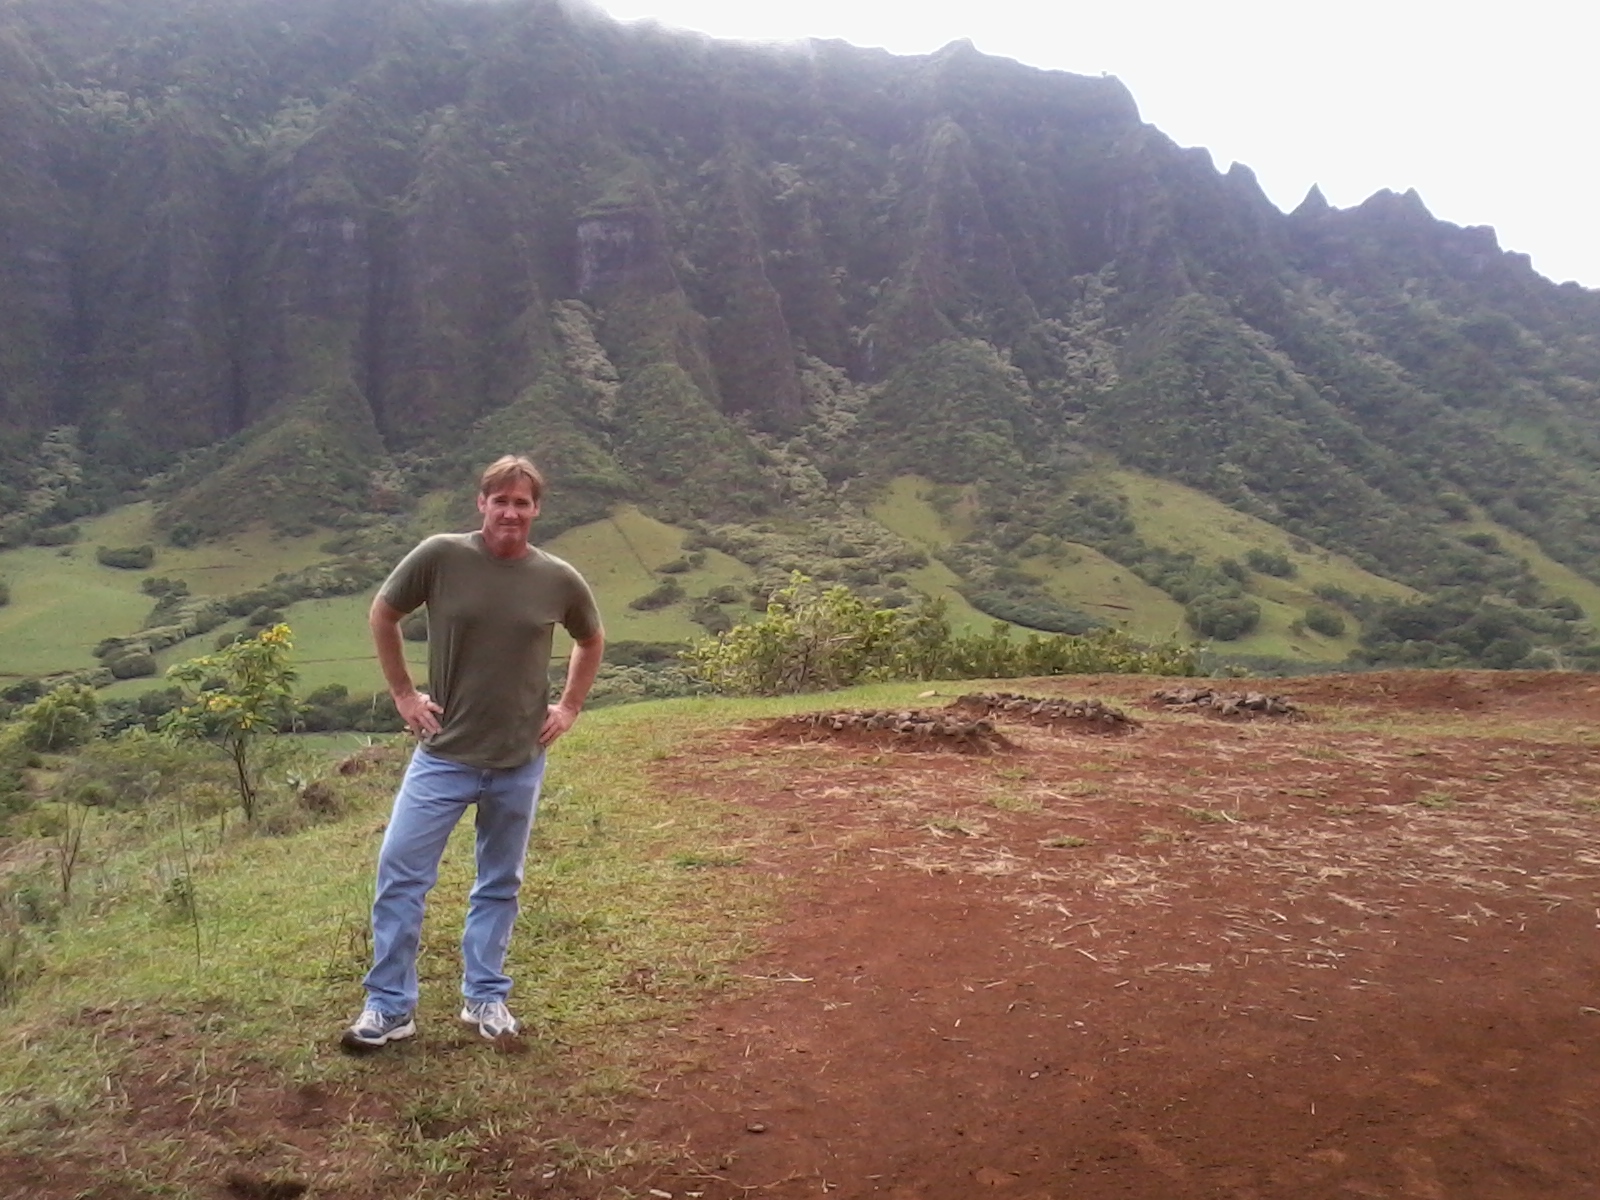 Joseph Wilson on location in Hawaii working on 